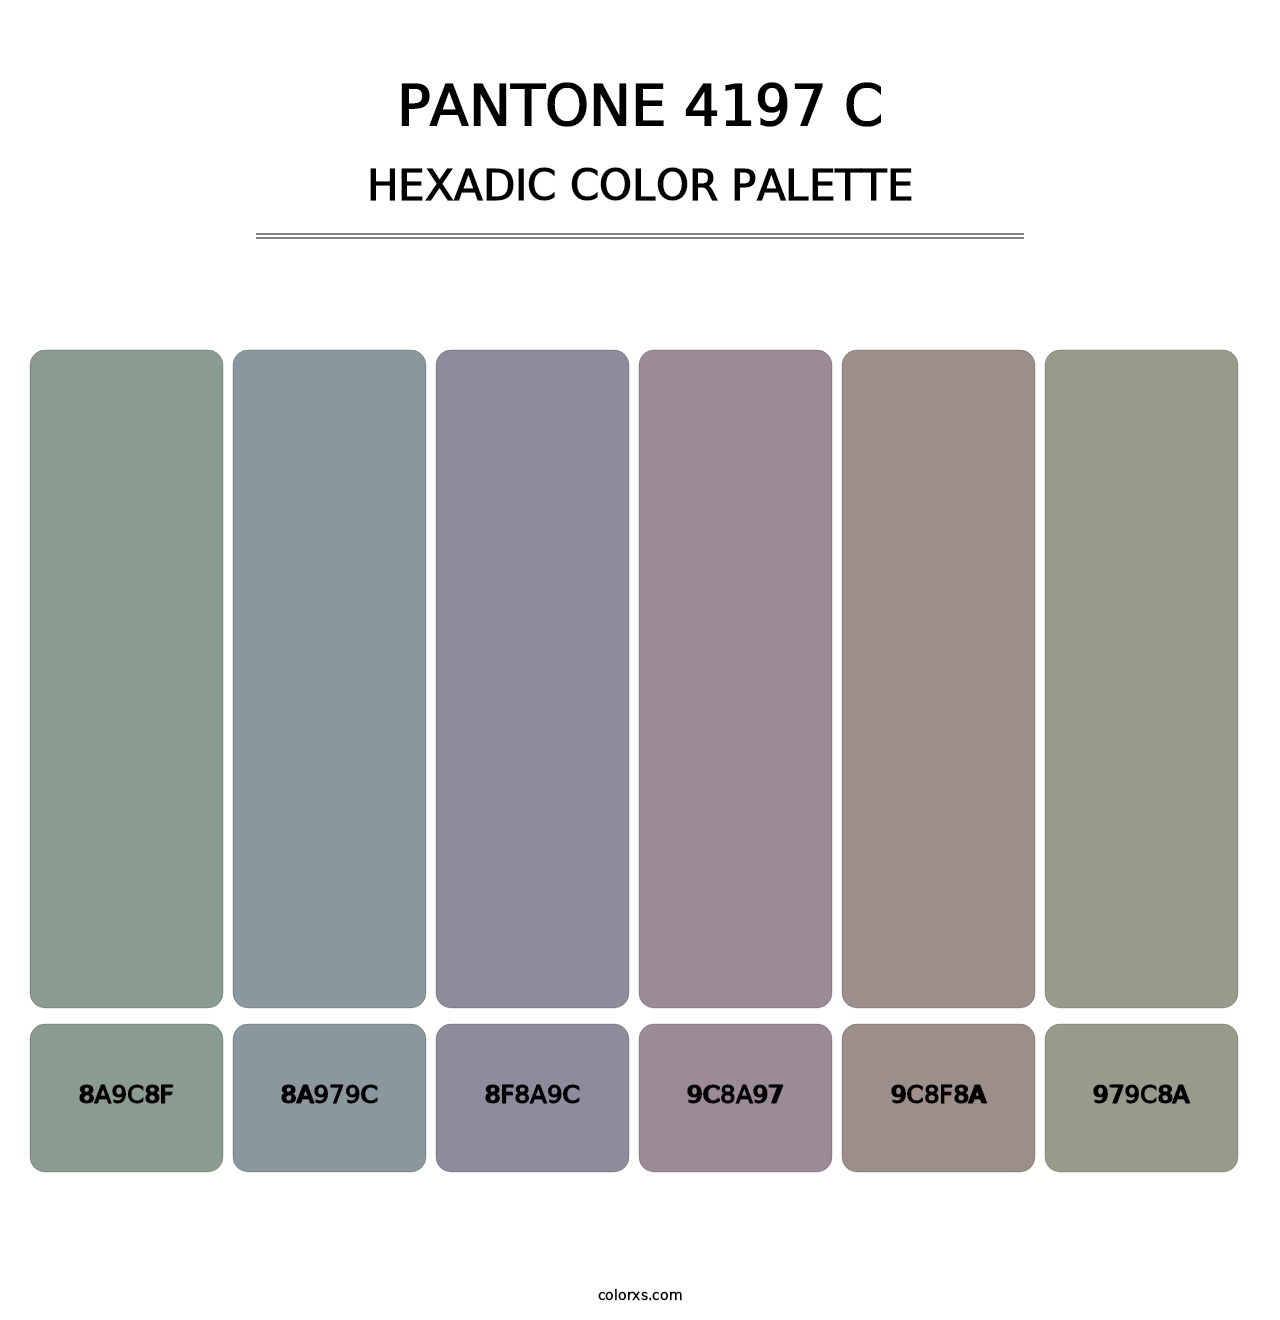 PANTONE 4197 C - Hexadic Color Palette